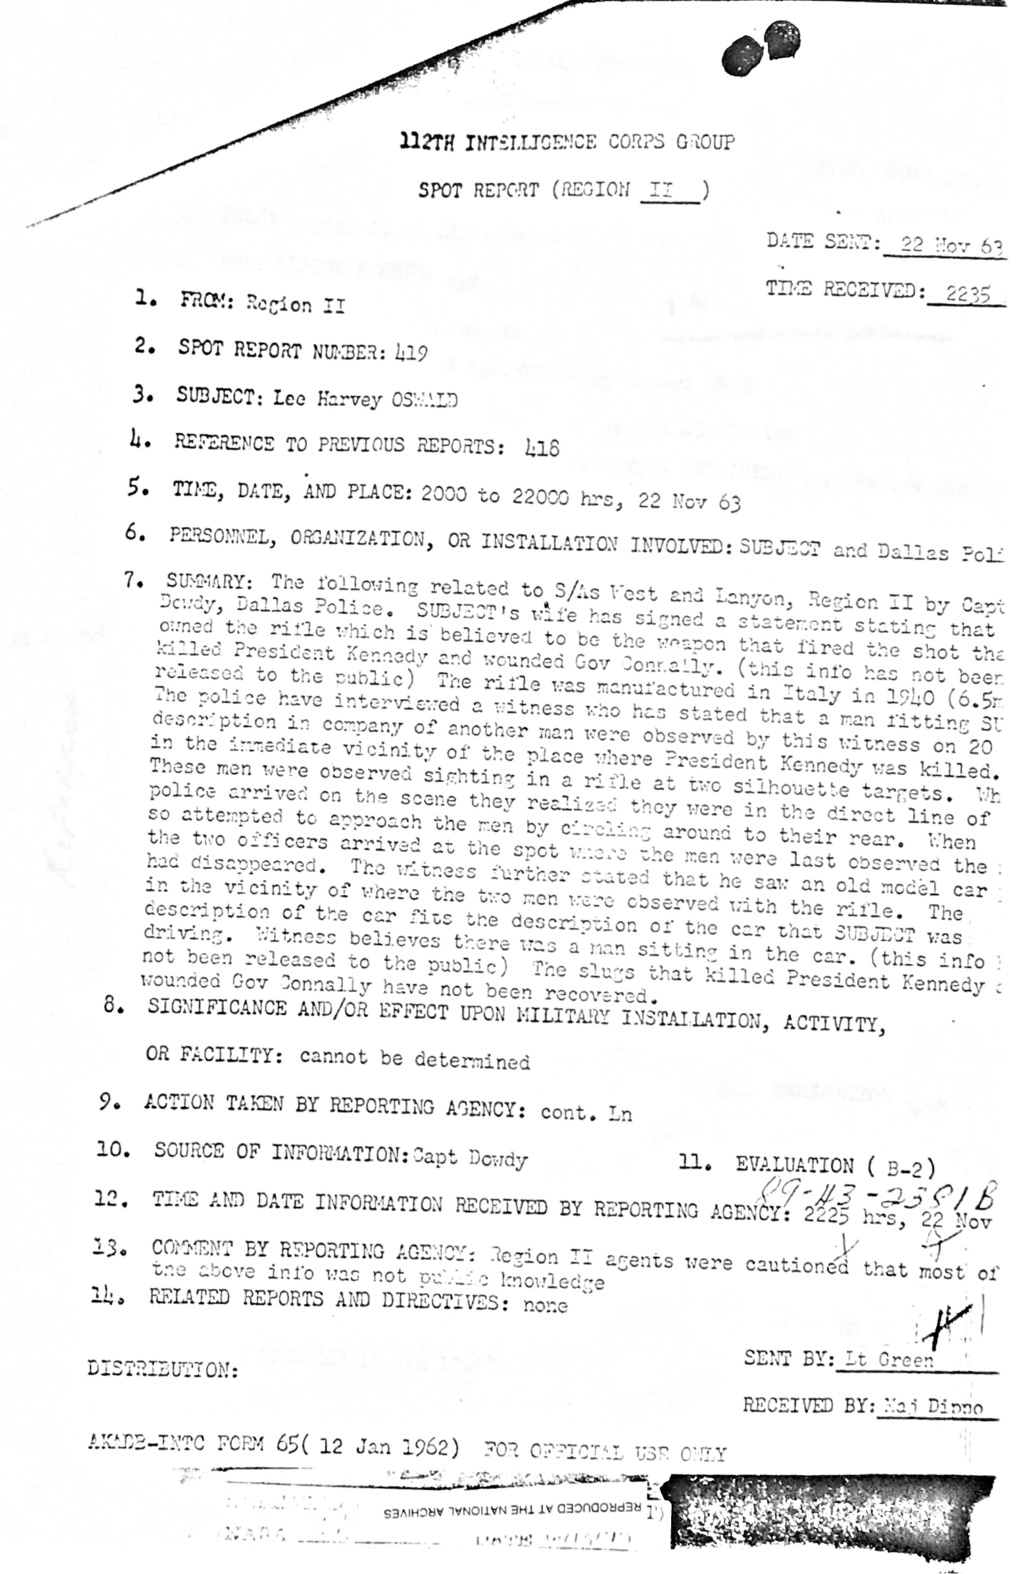 112th Intelligence Corps Group Spot Spot Report Nov 22 1963 2349e410